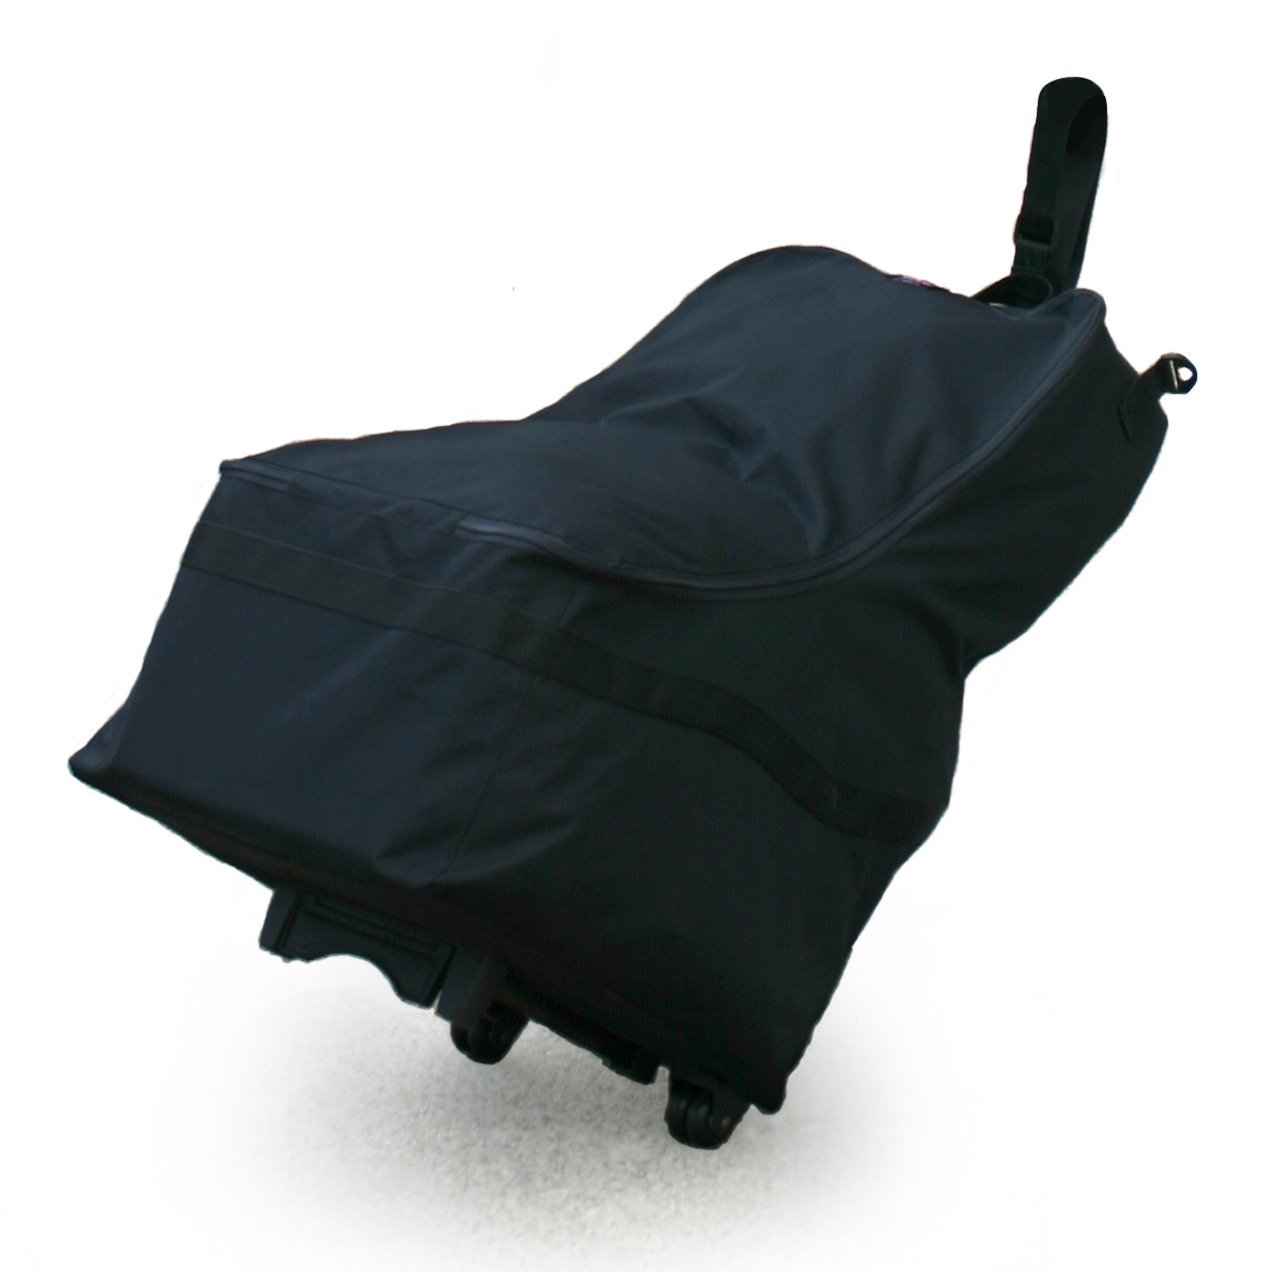 J.L. Childress Ultimate Car Seat Travel Bag